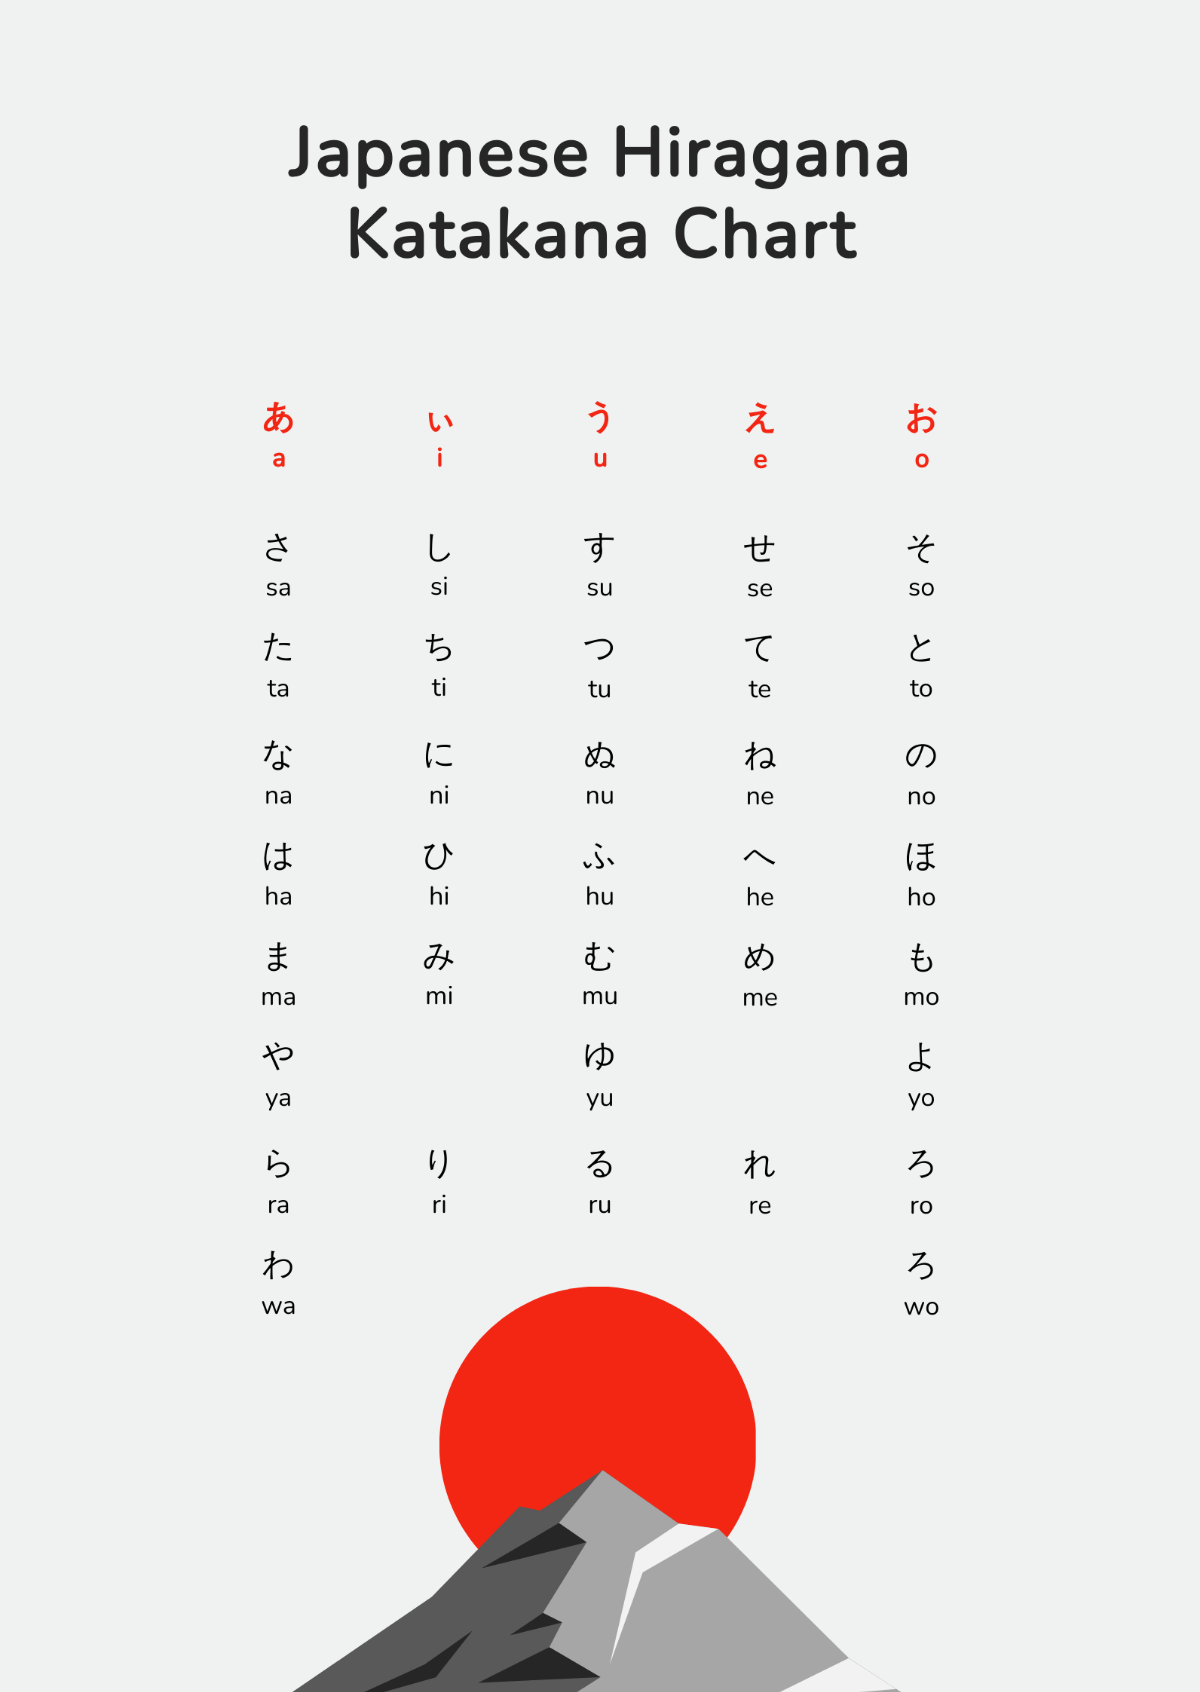 Japanese Hiragana Katakana Chart Template